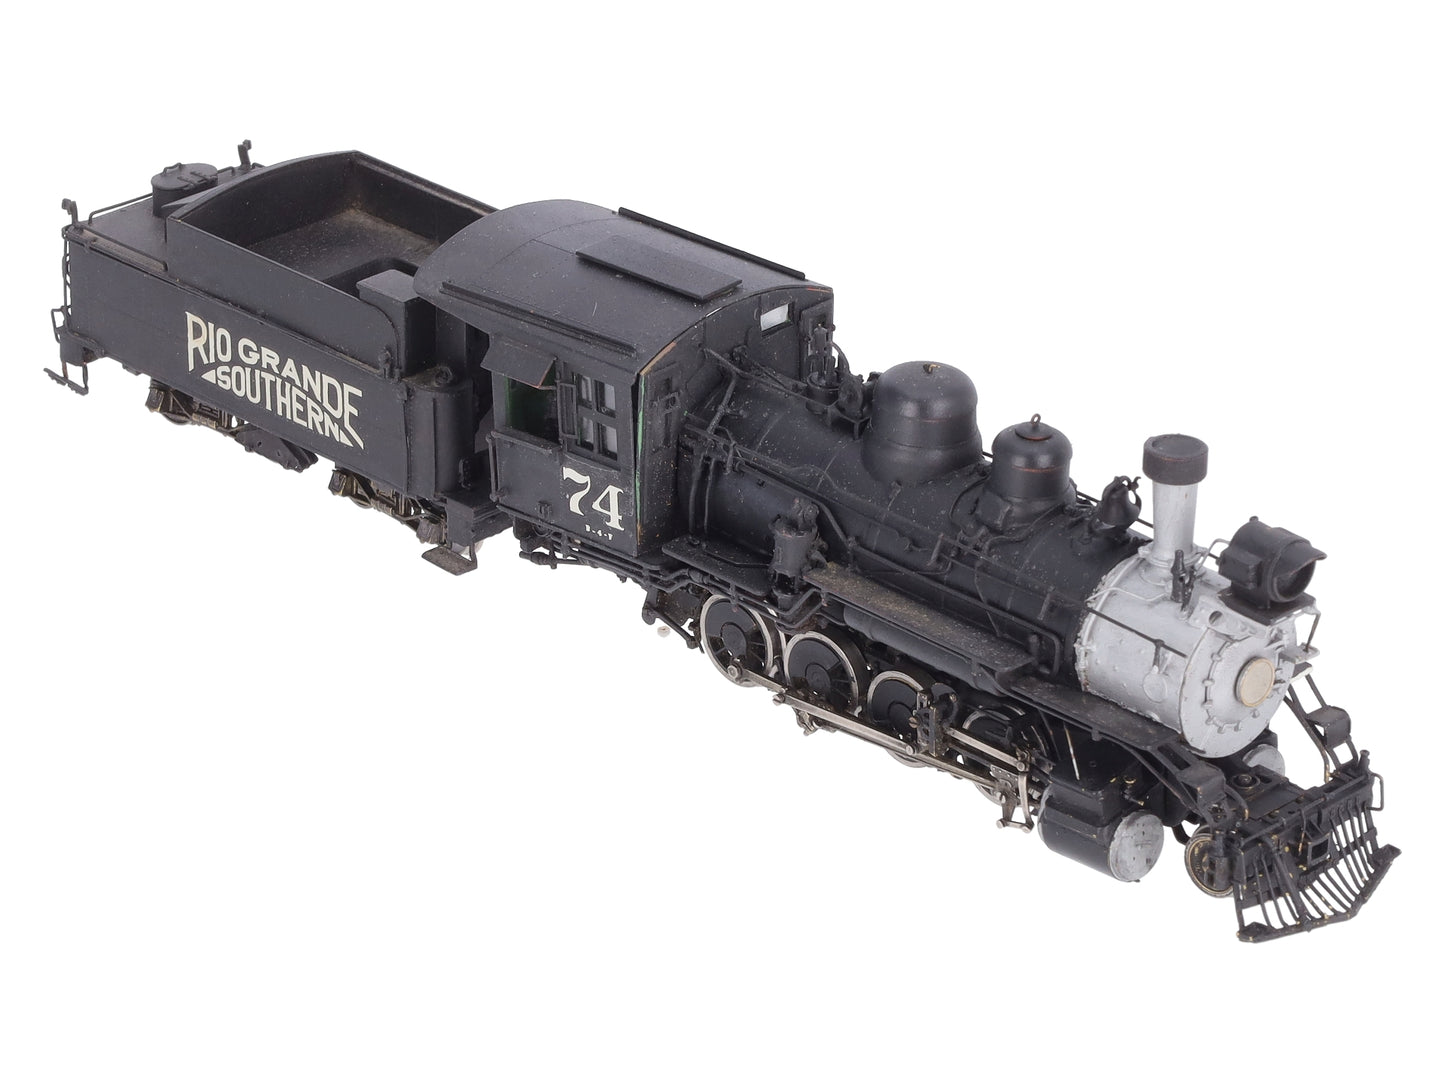 Overland 1711 Sn3 BRASS RGS #74 2-8-0 Class B-4F Steam Locomotive & Tender EX/Box